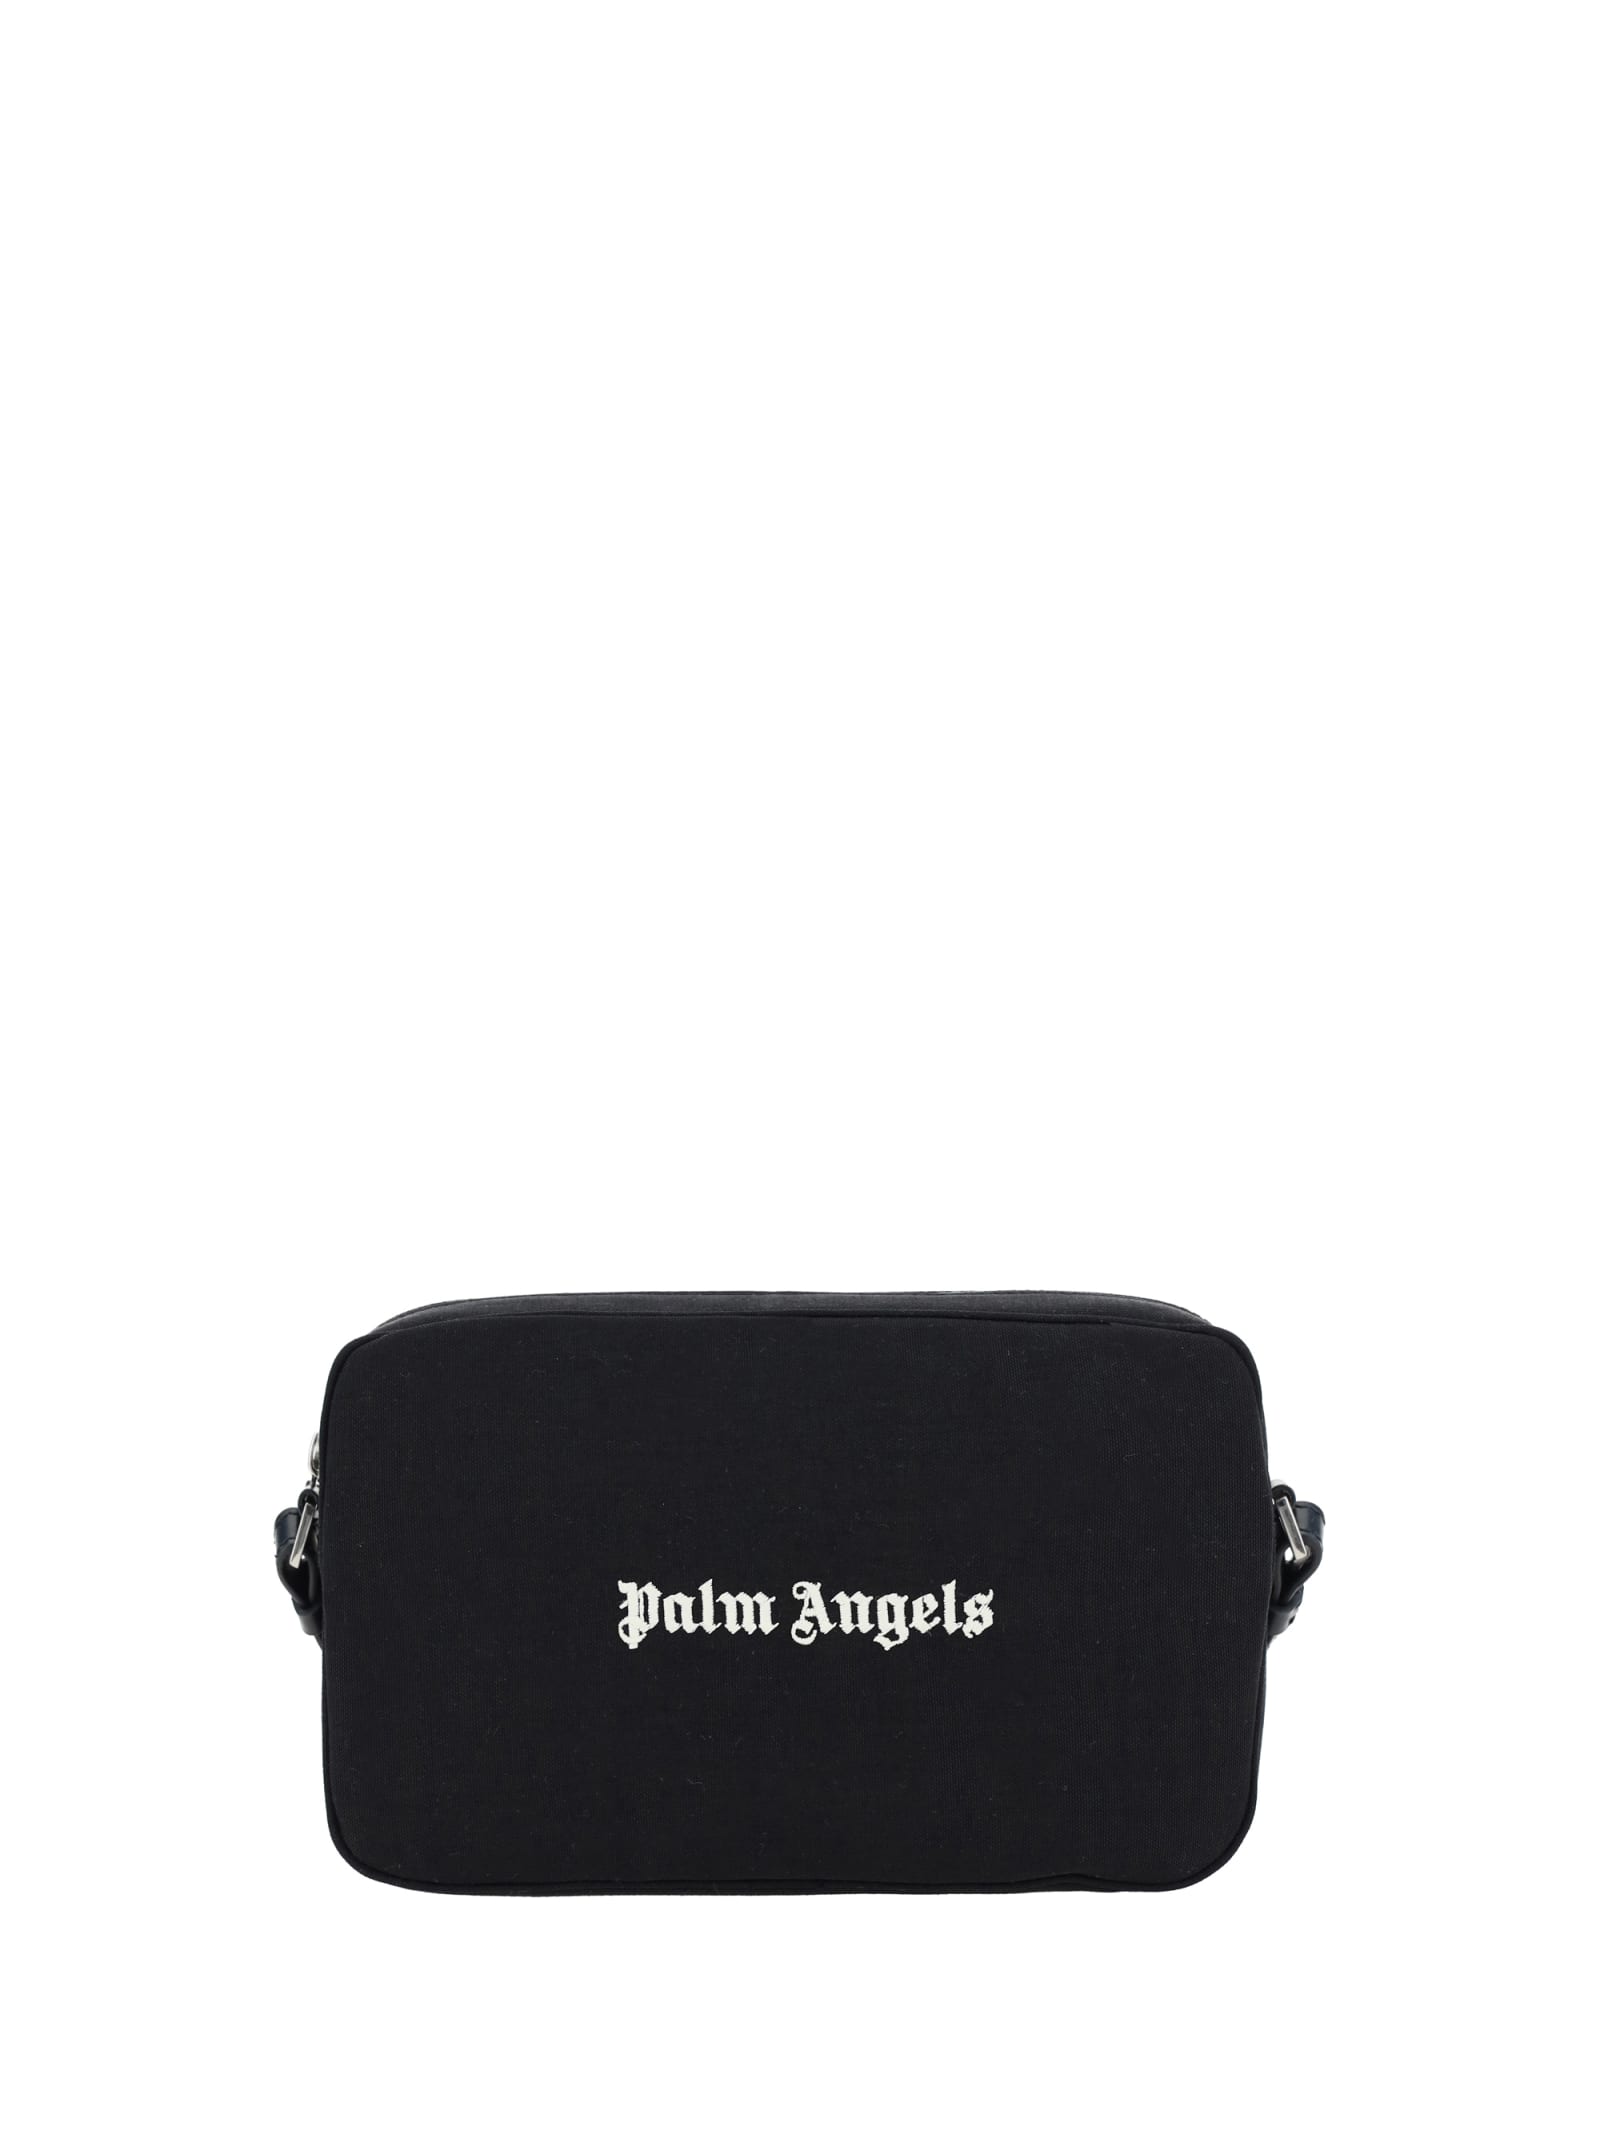 Palm Angels Camera Case Bag